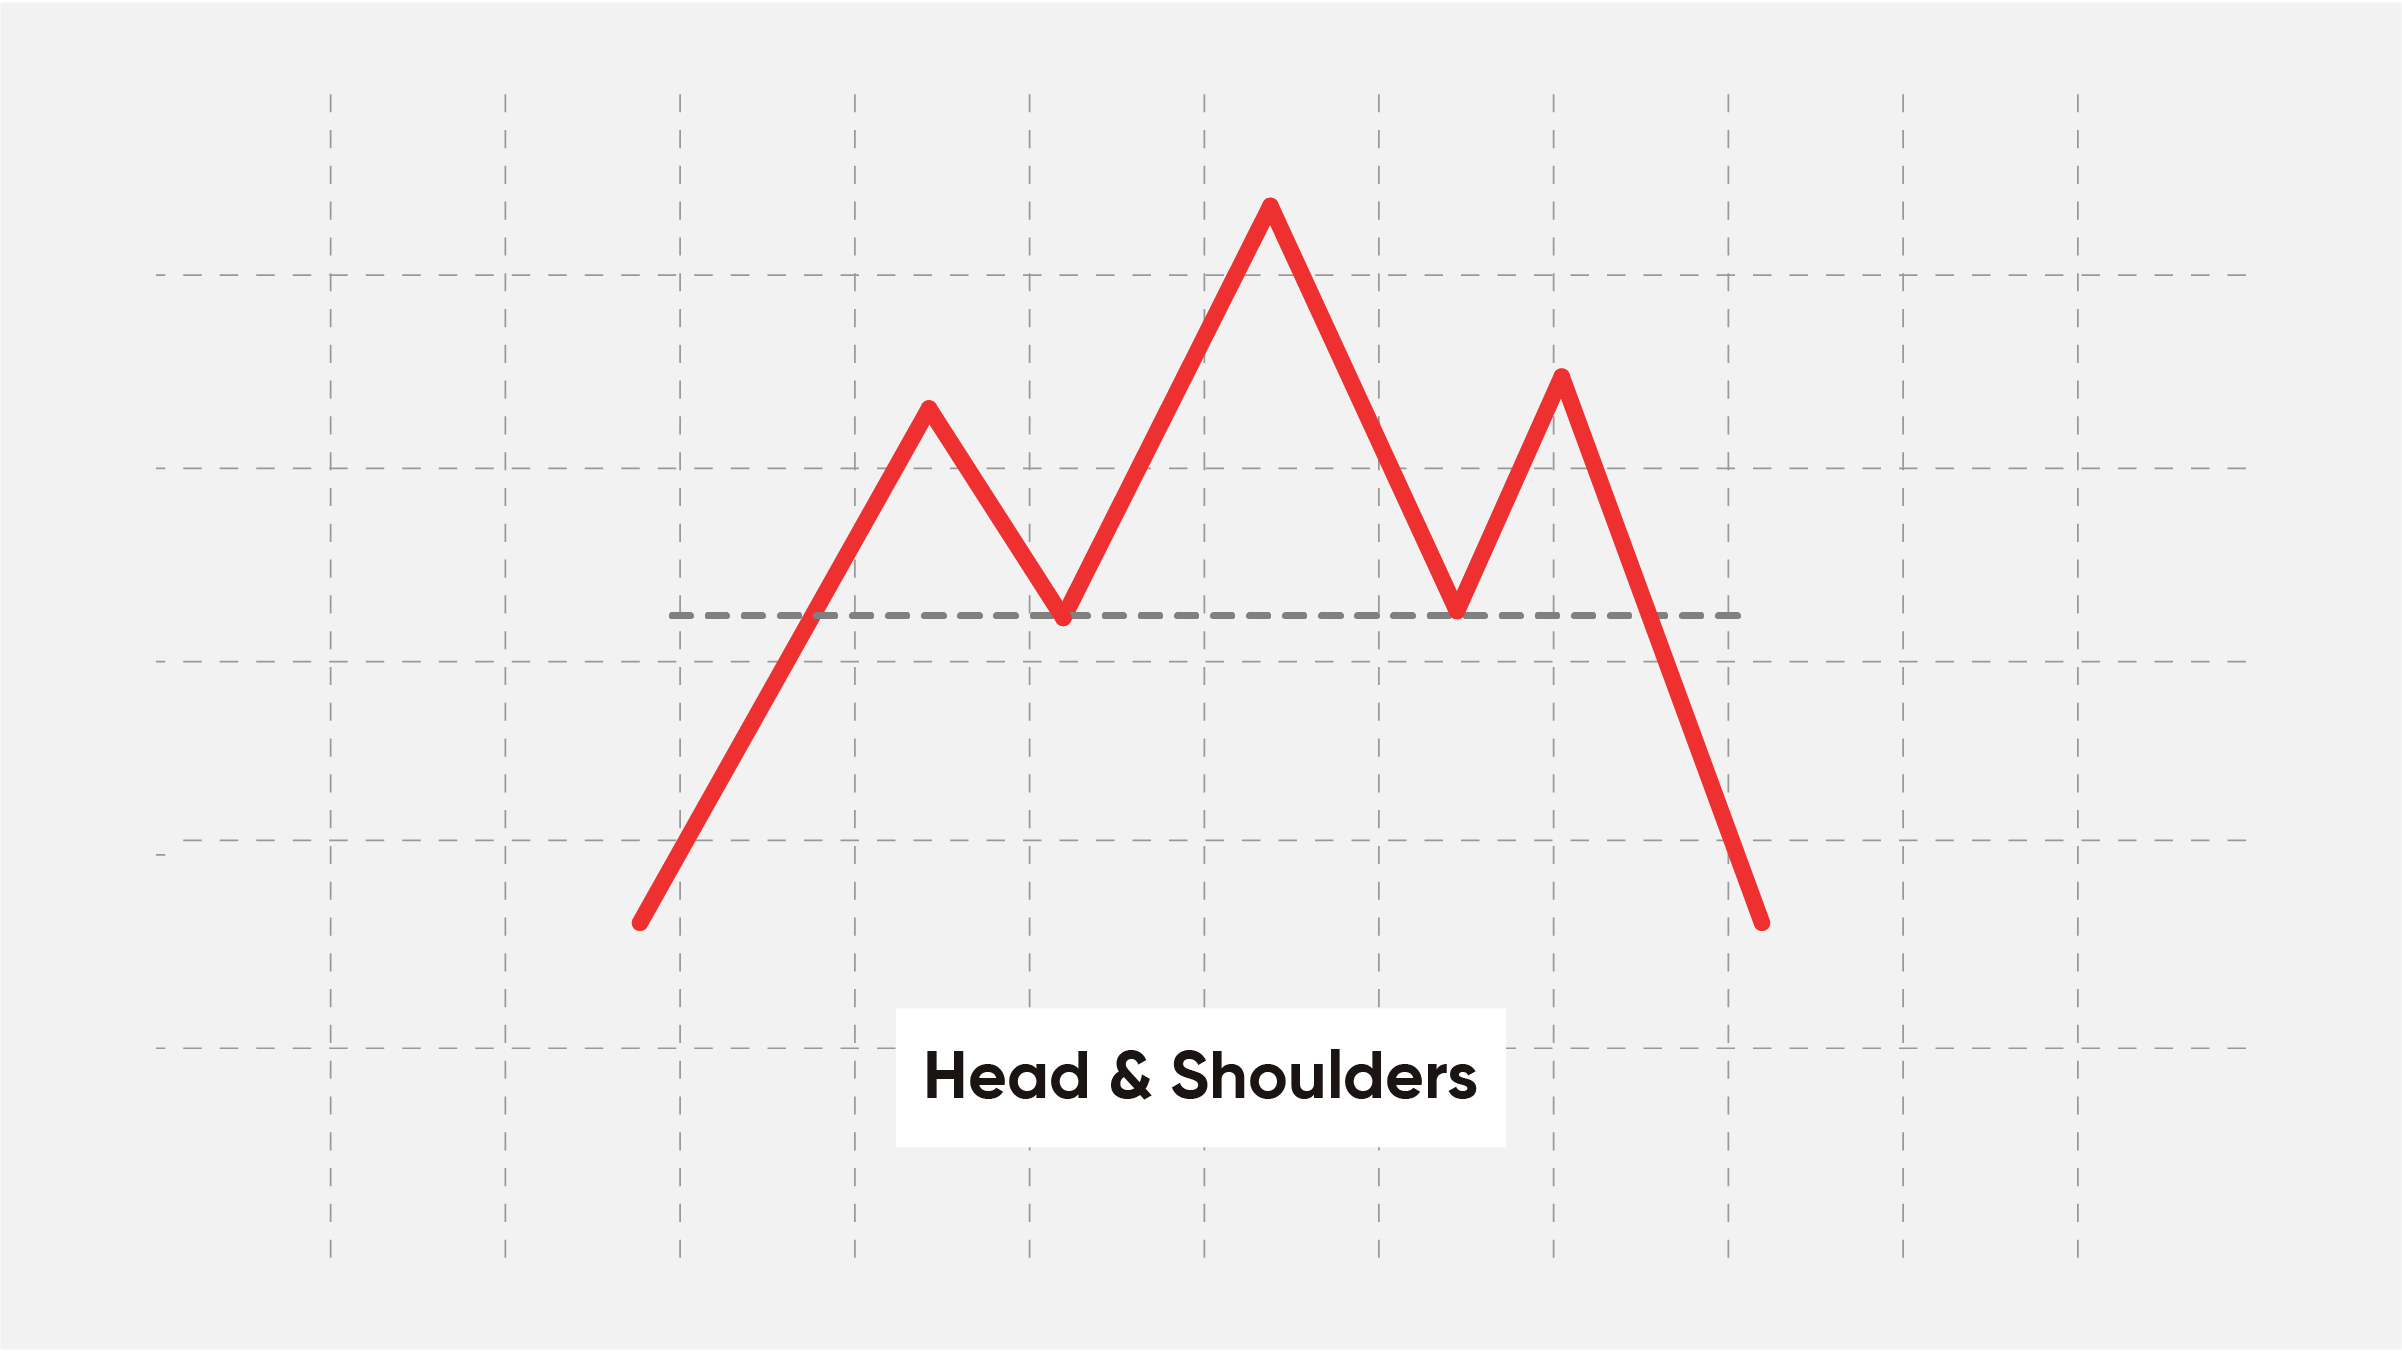 head shoulders - معرفی ۵ الگوی کلاسیک در ترید ارزهای دیجیتال